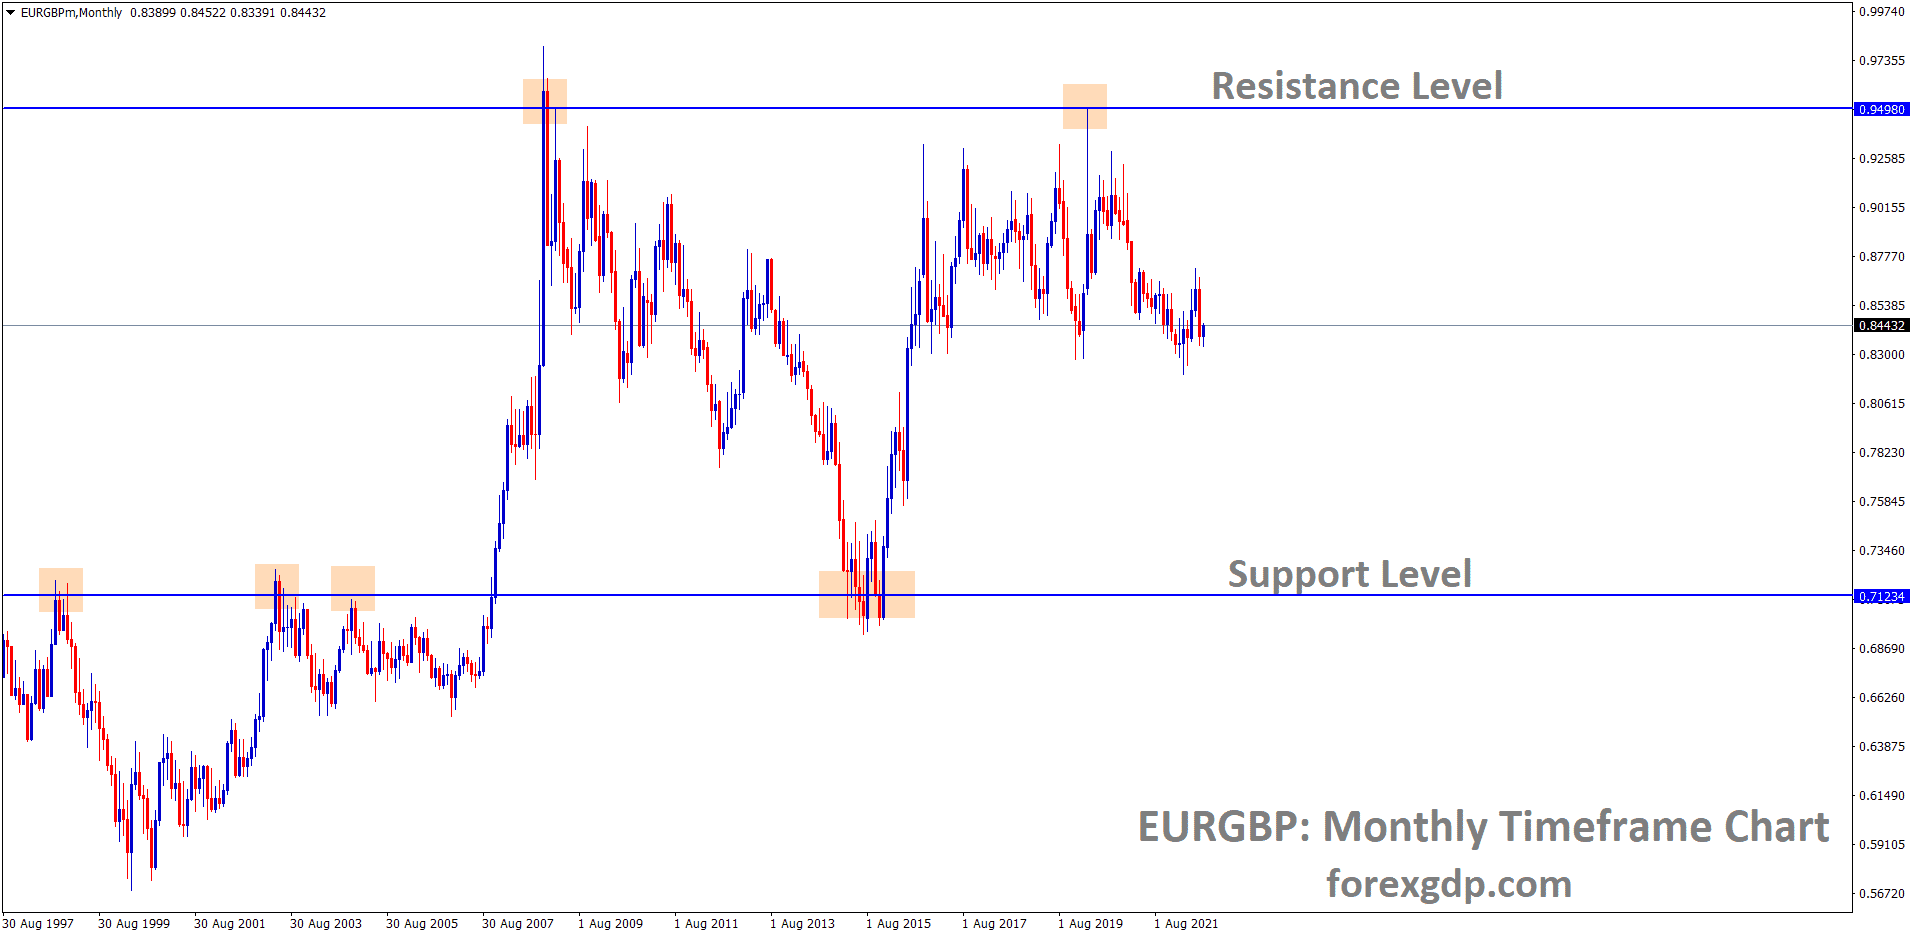 EURGBP currency pair ranging trend analysis